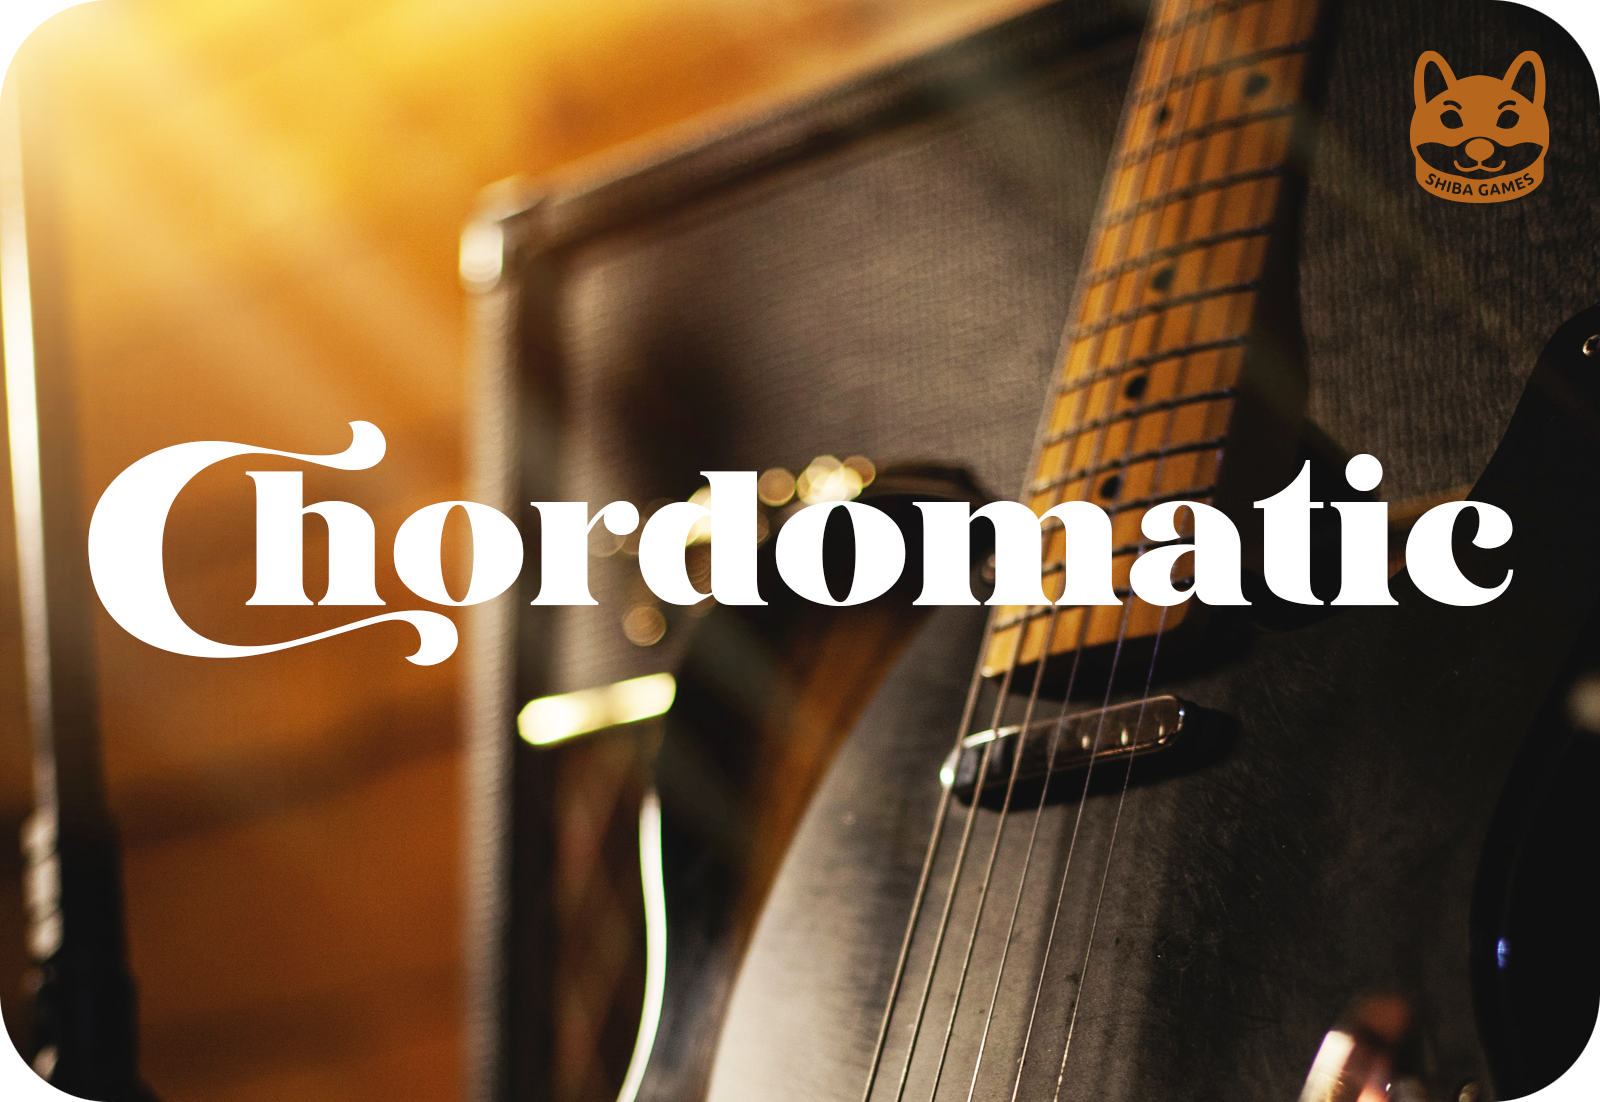 Chordomatic